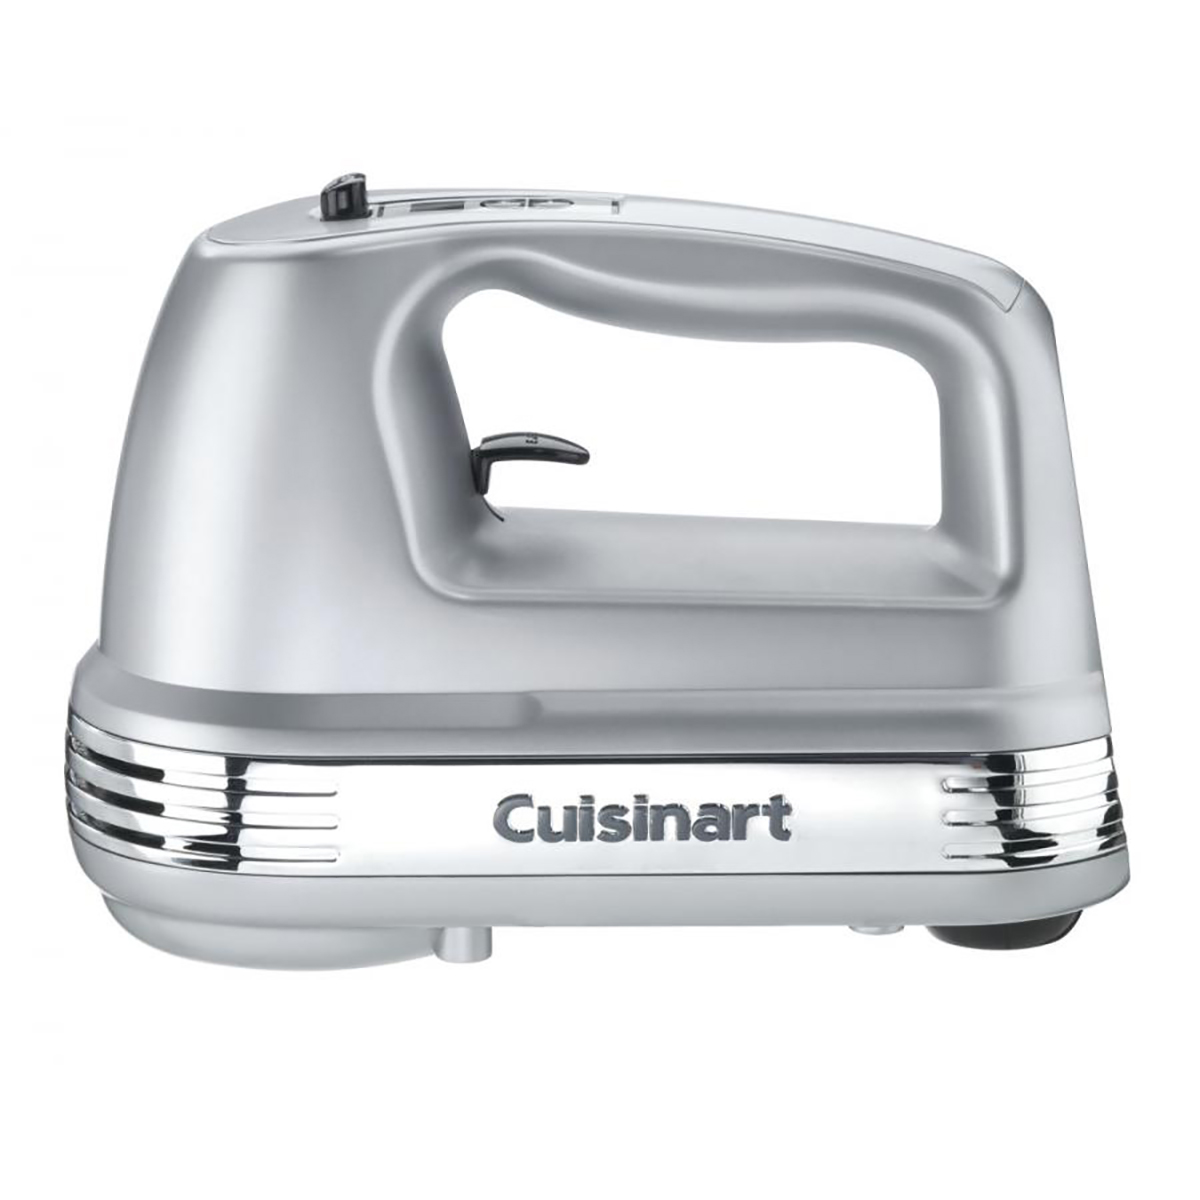 Cuisinart(R) Power Advantage Plus 9 Speed Mixer With Storage Case